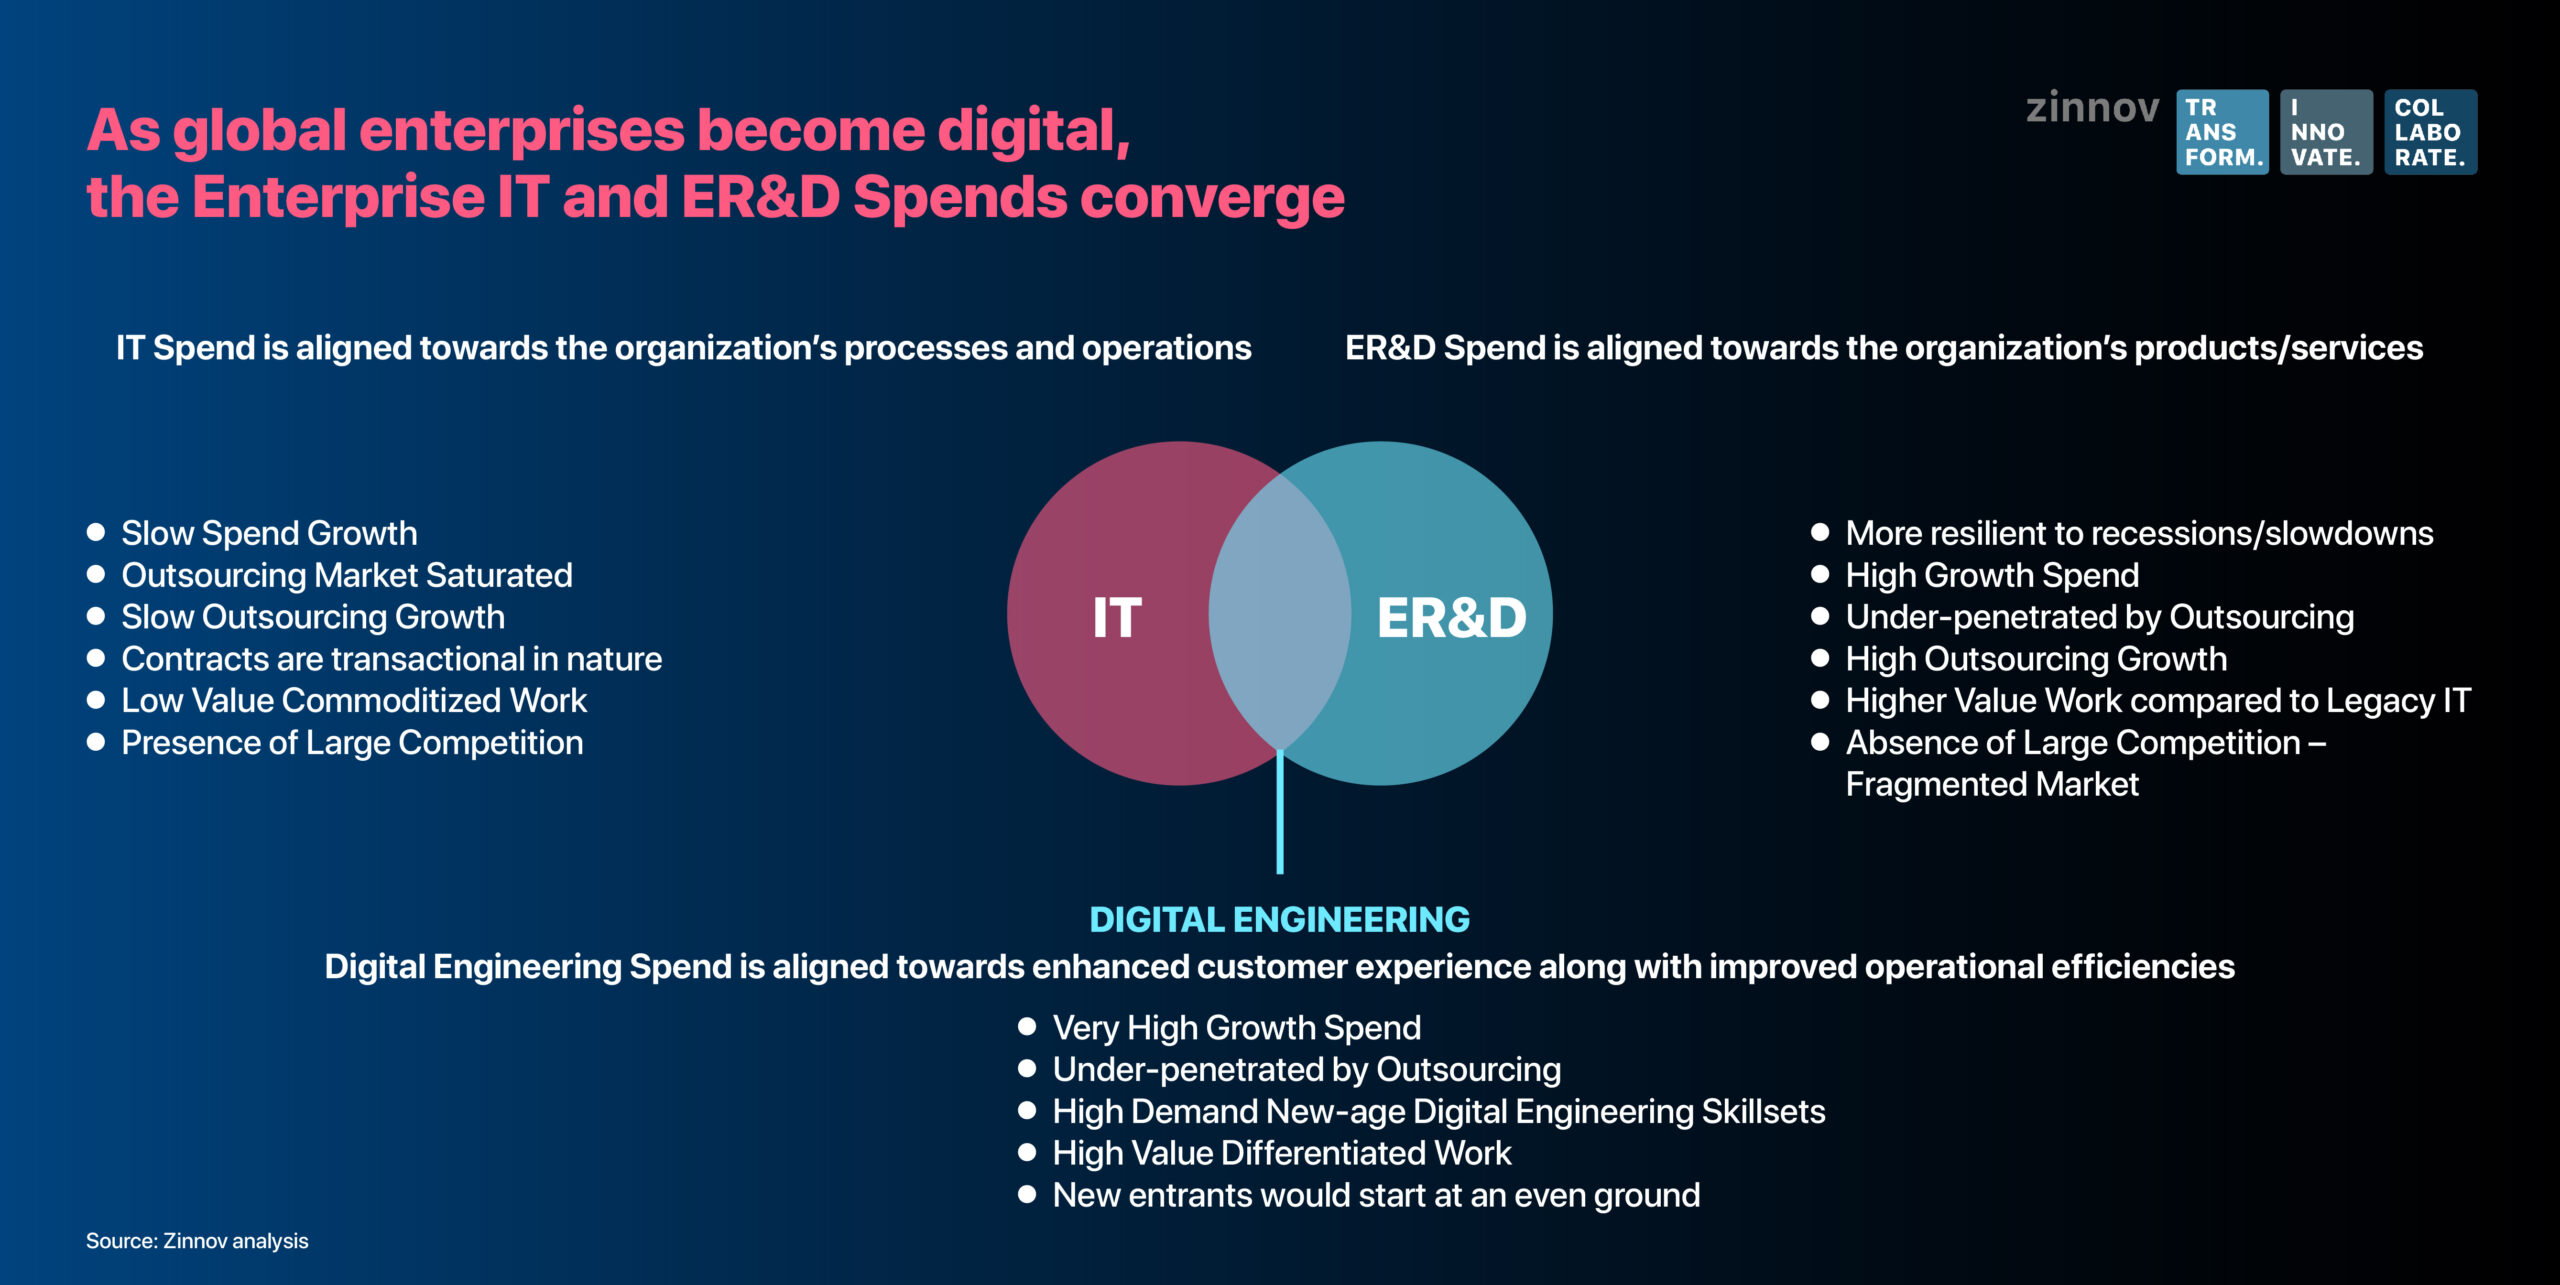 Enterprise IT and ER&D Spends